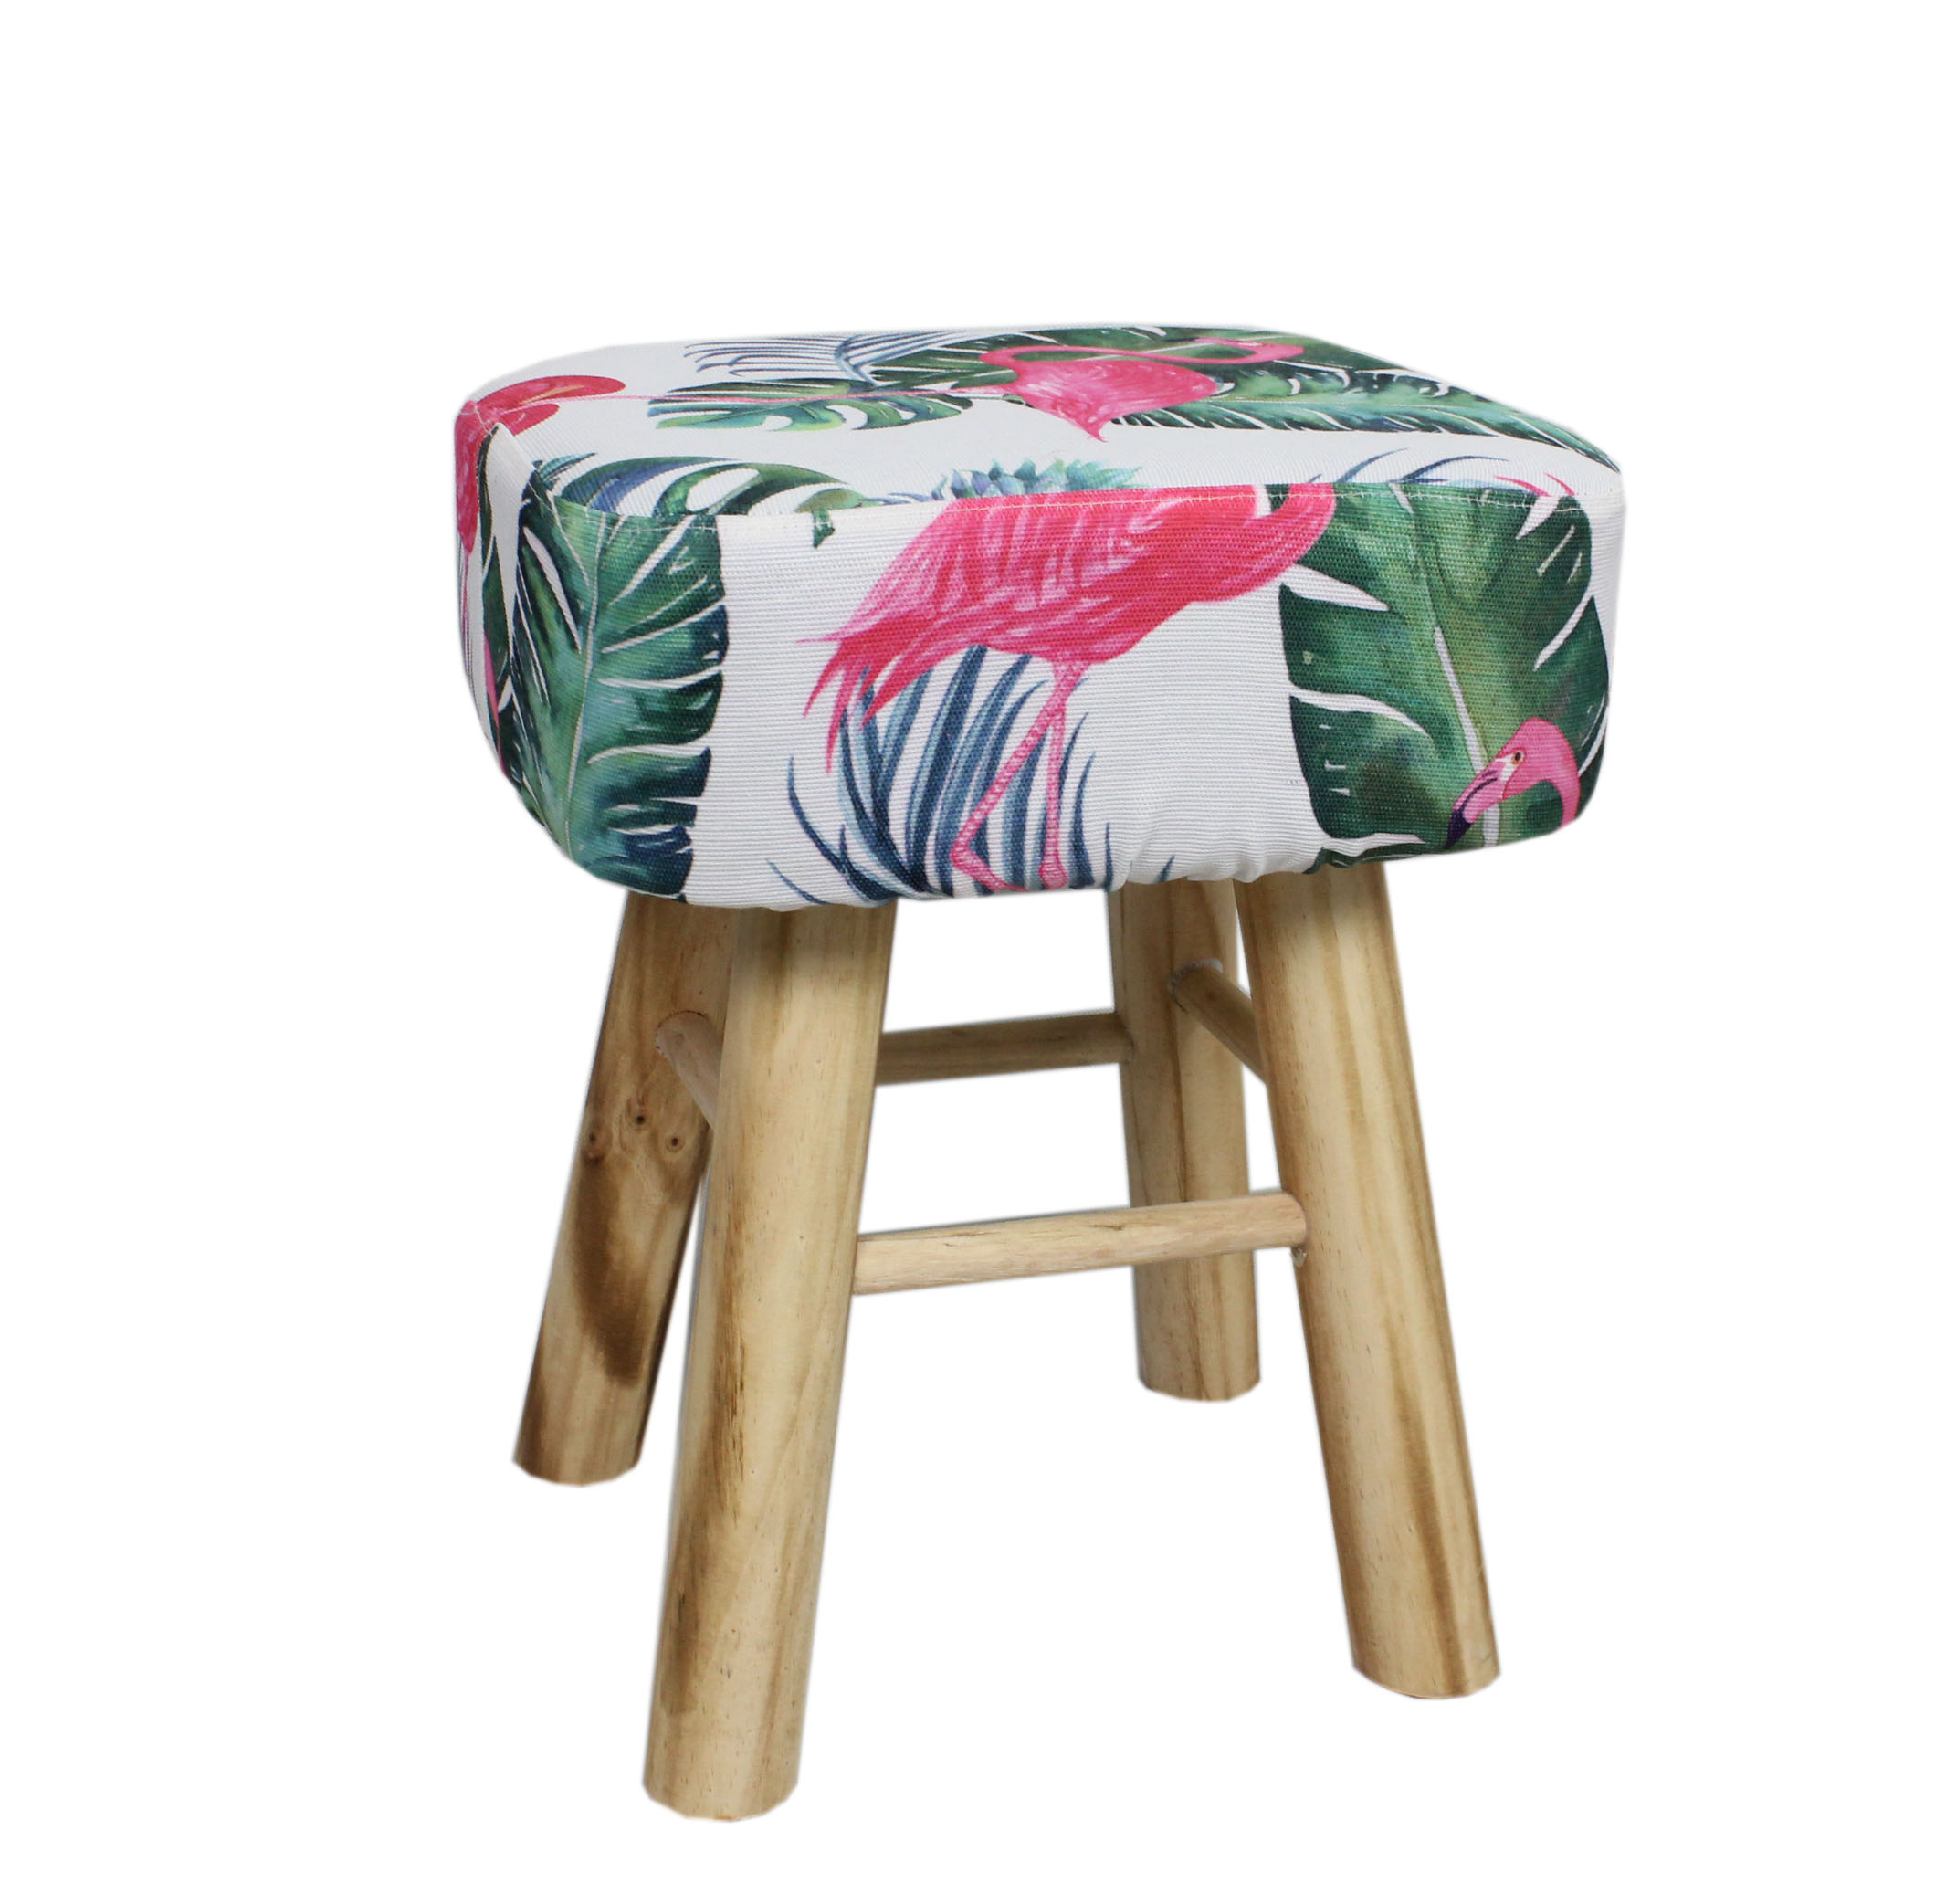 Wood & Fabric Footstool with leaf design-5592